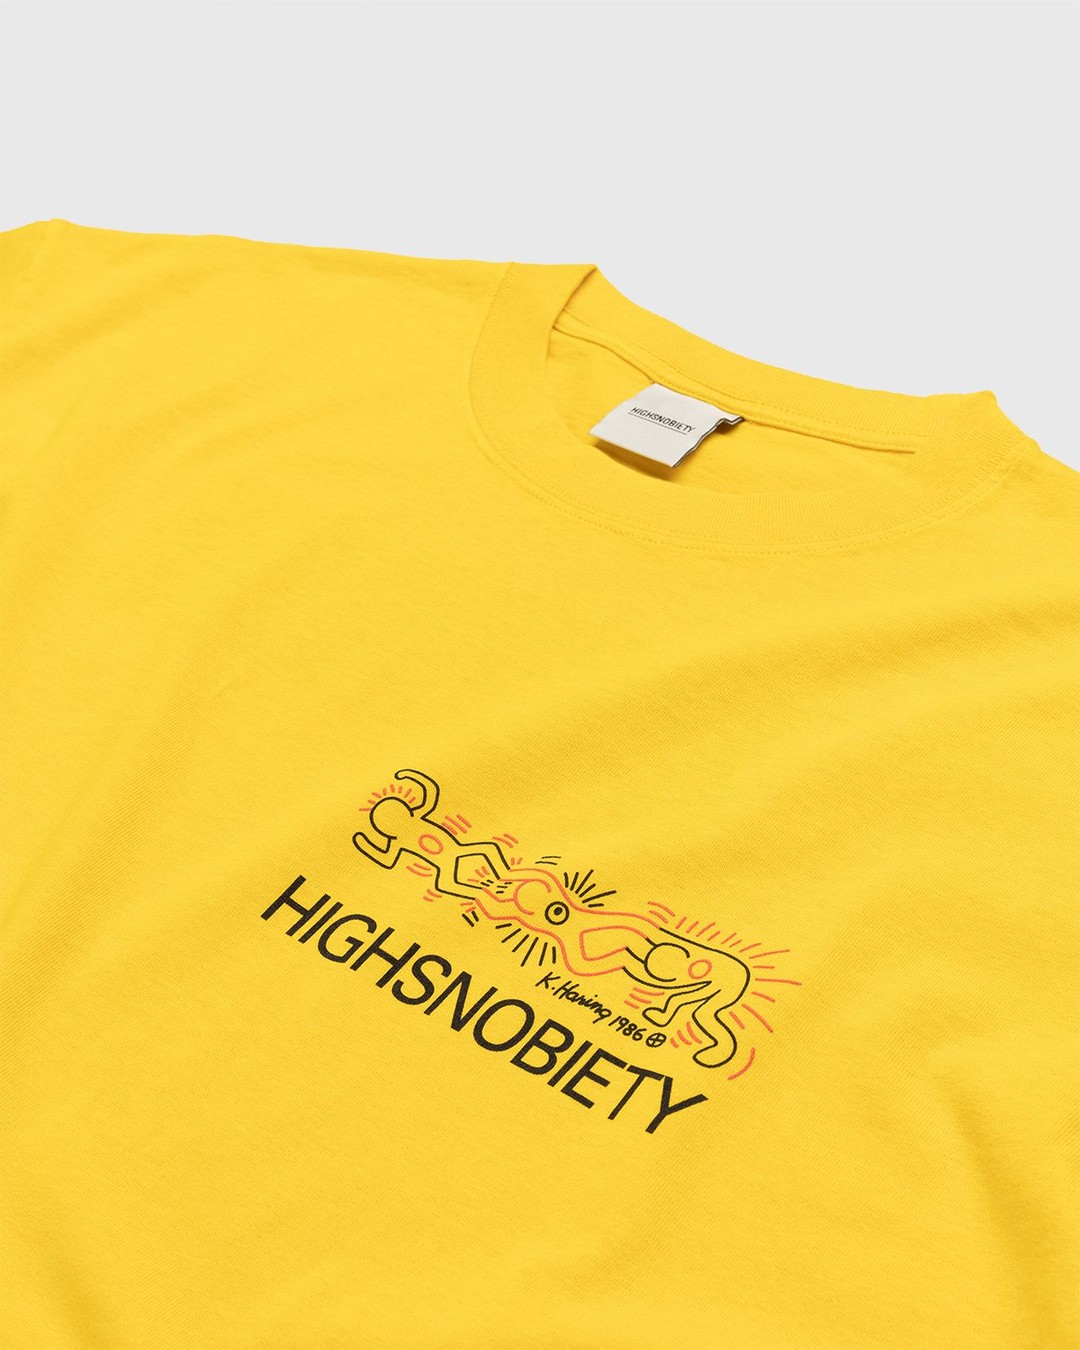 Highsnobiety – Keith Haring Longsleeve Yellow - Longsleeves - Yellow - Image 3